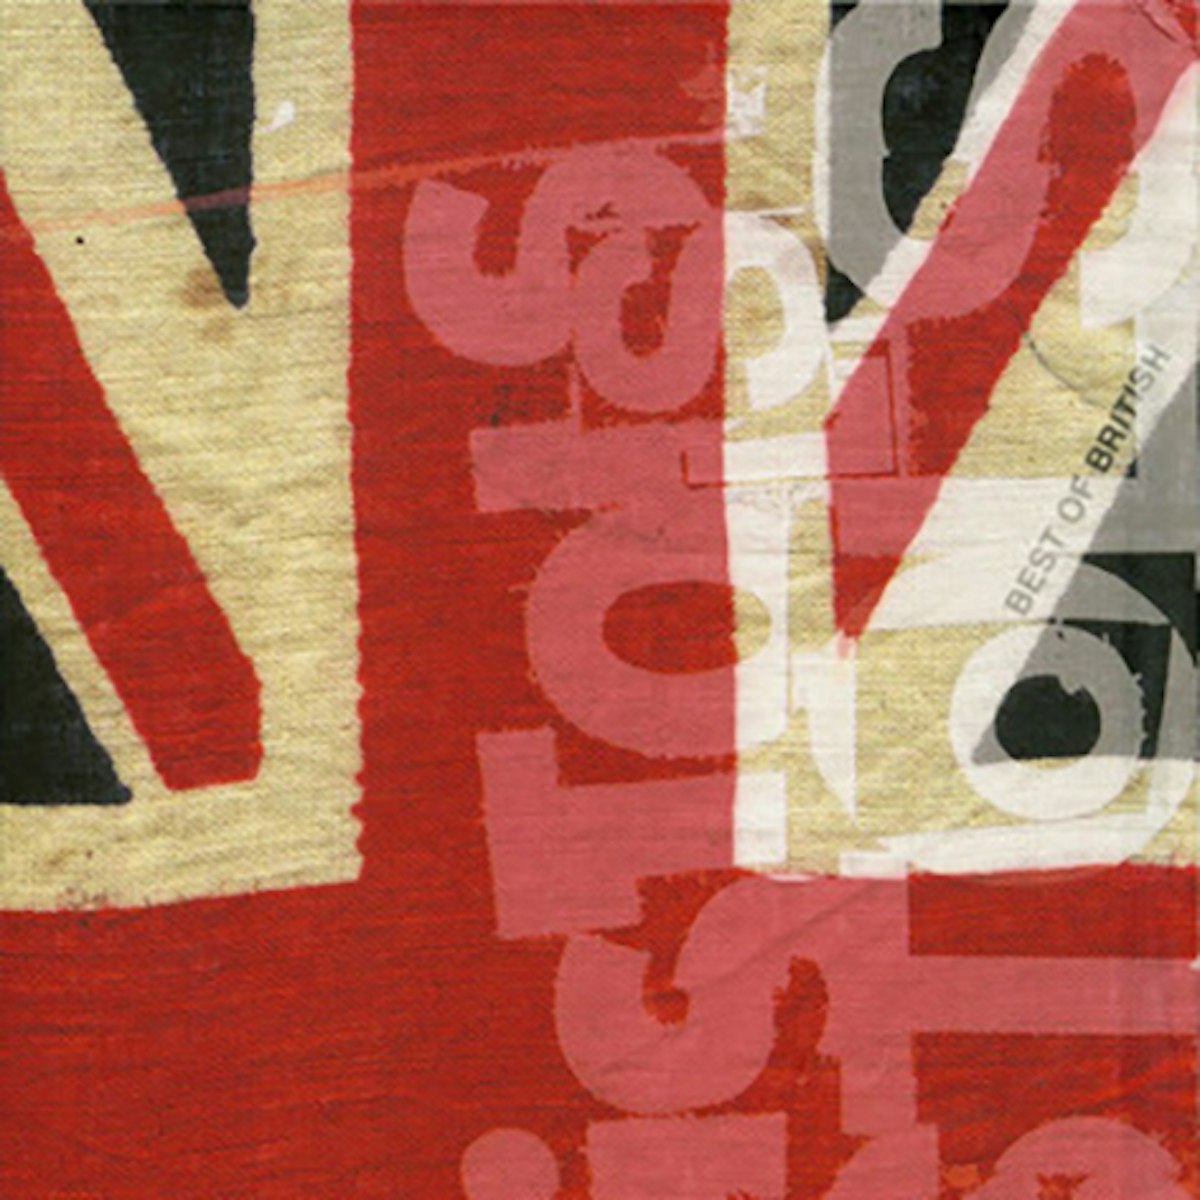 Sex Pistols Public Image Ltd And John Lydons Best Albums Ranked